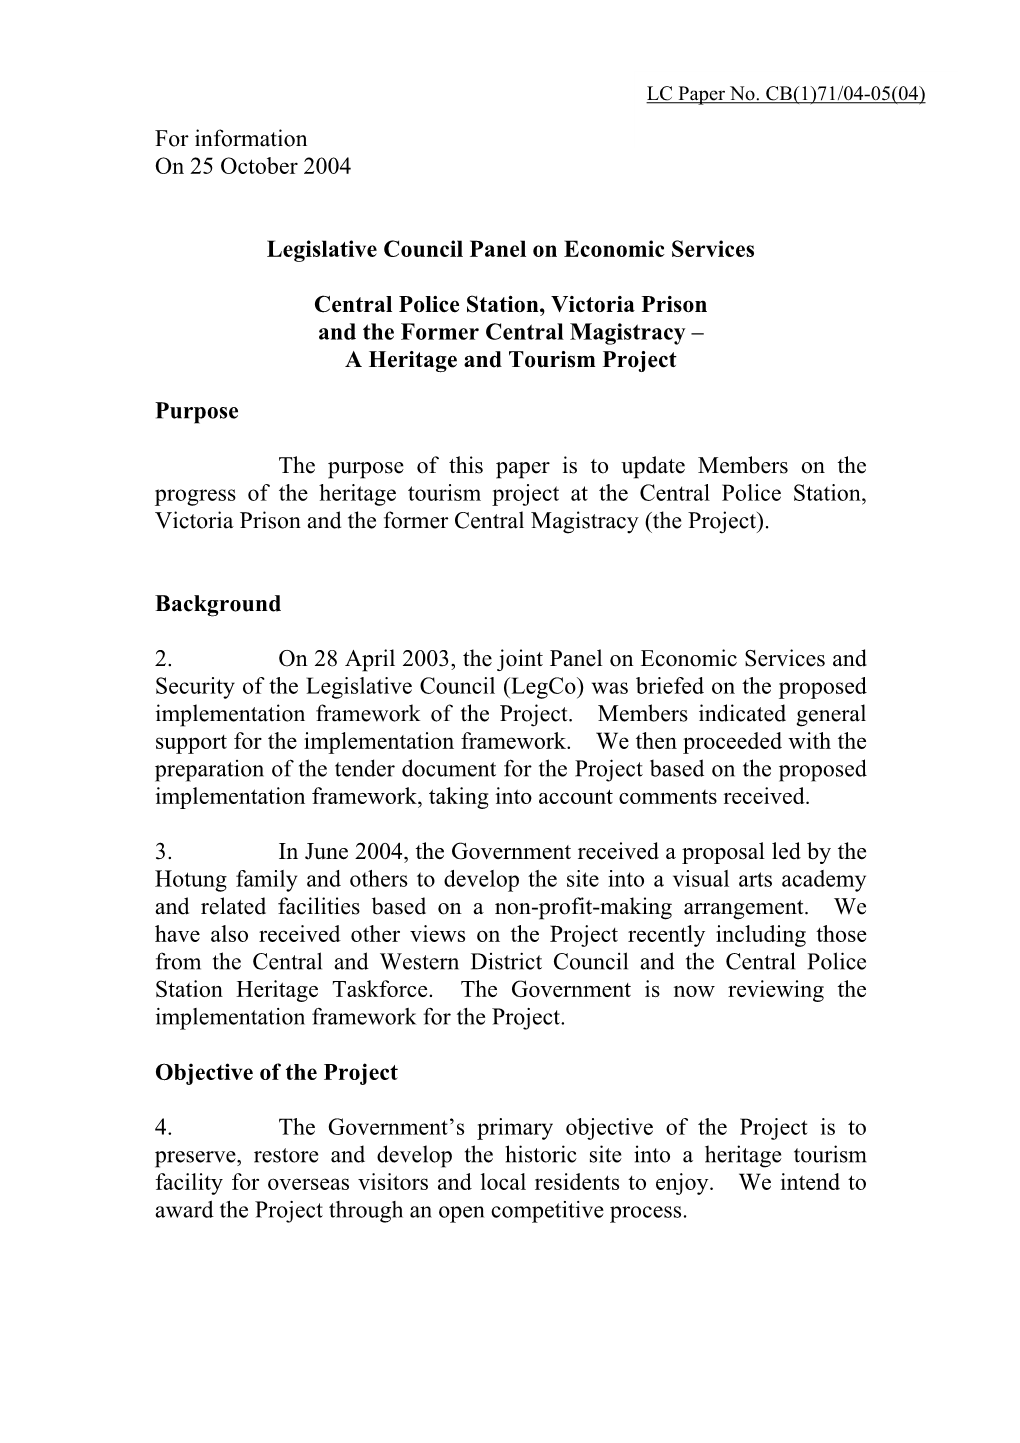 For Information on 25 October 2004 Legislative Council Panel On